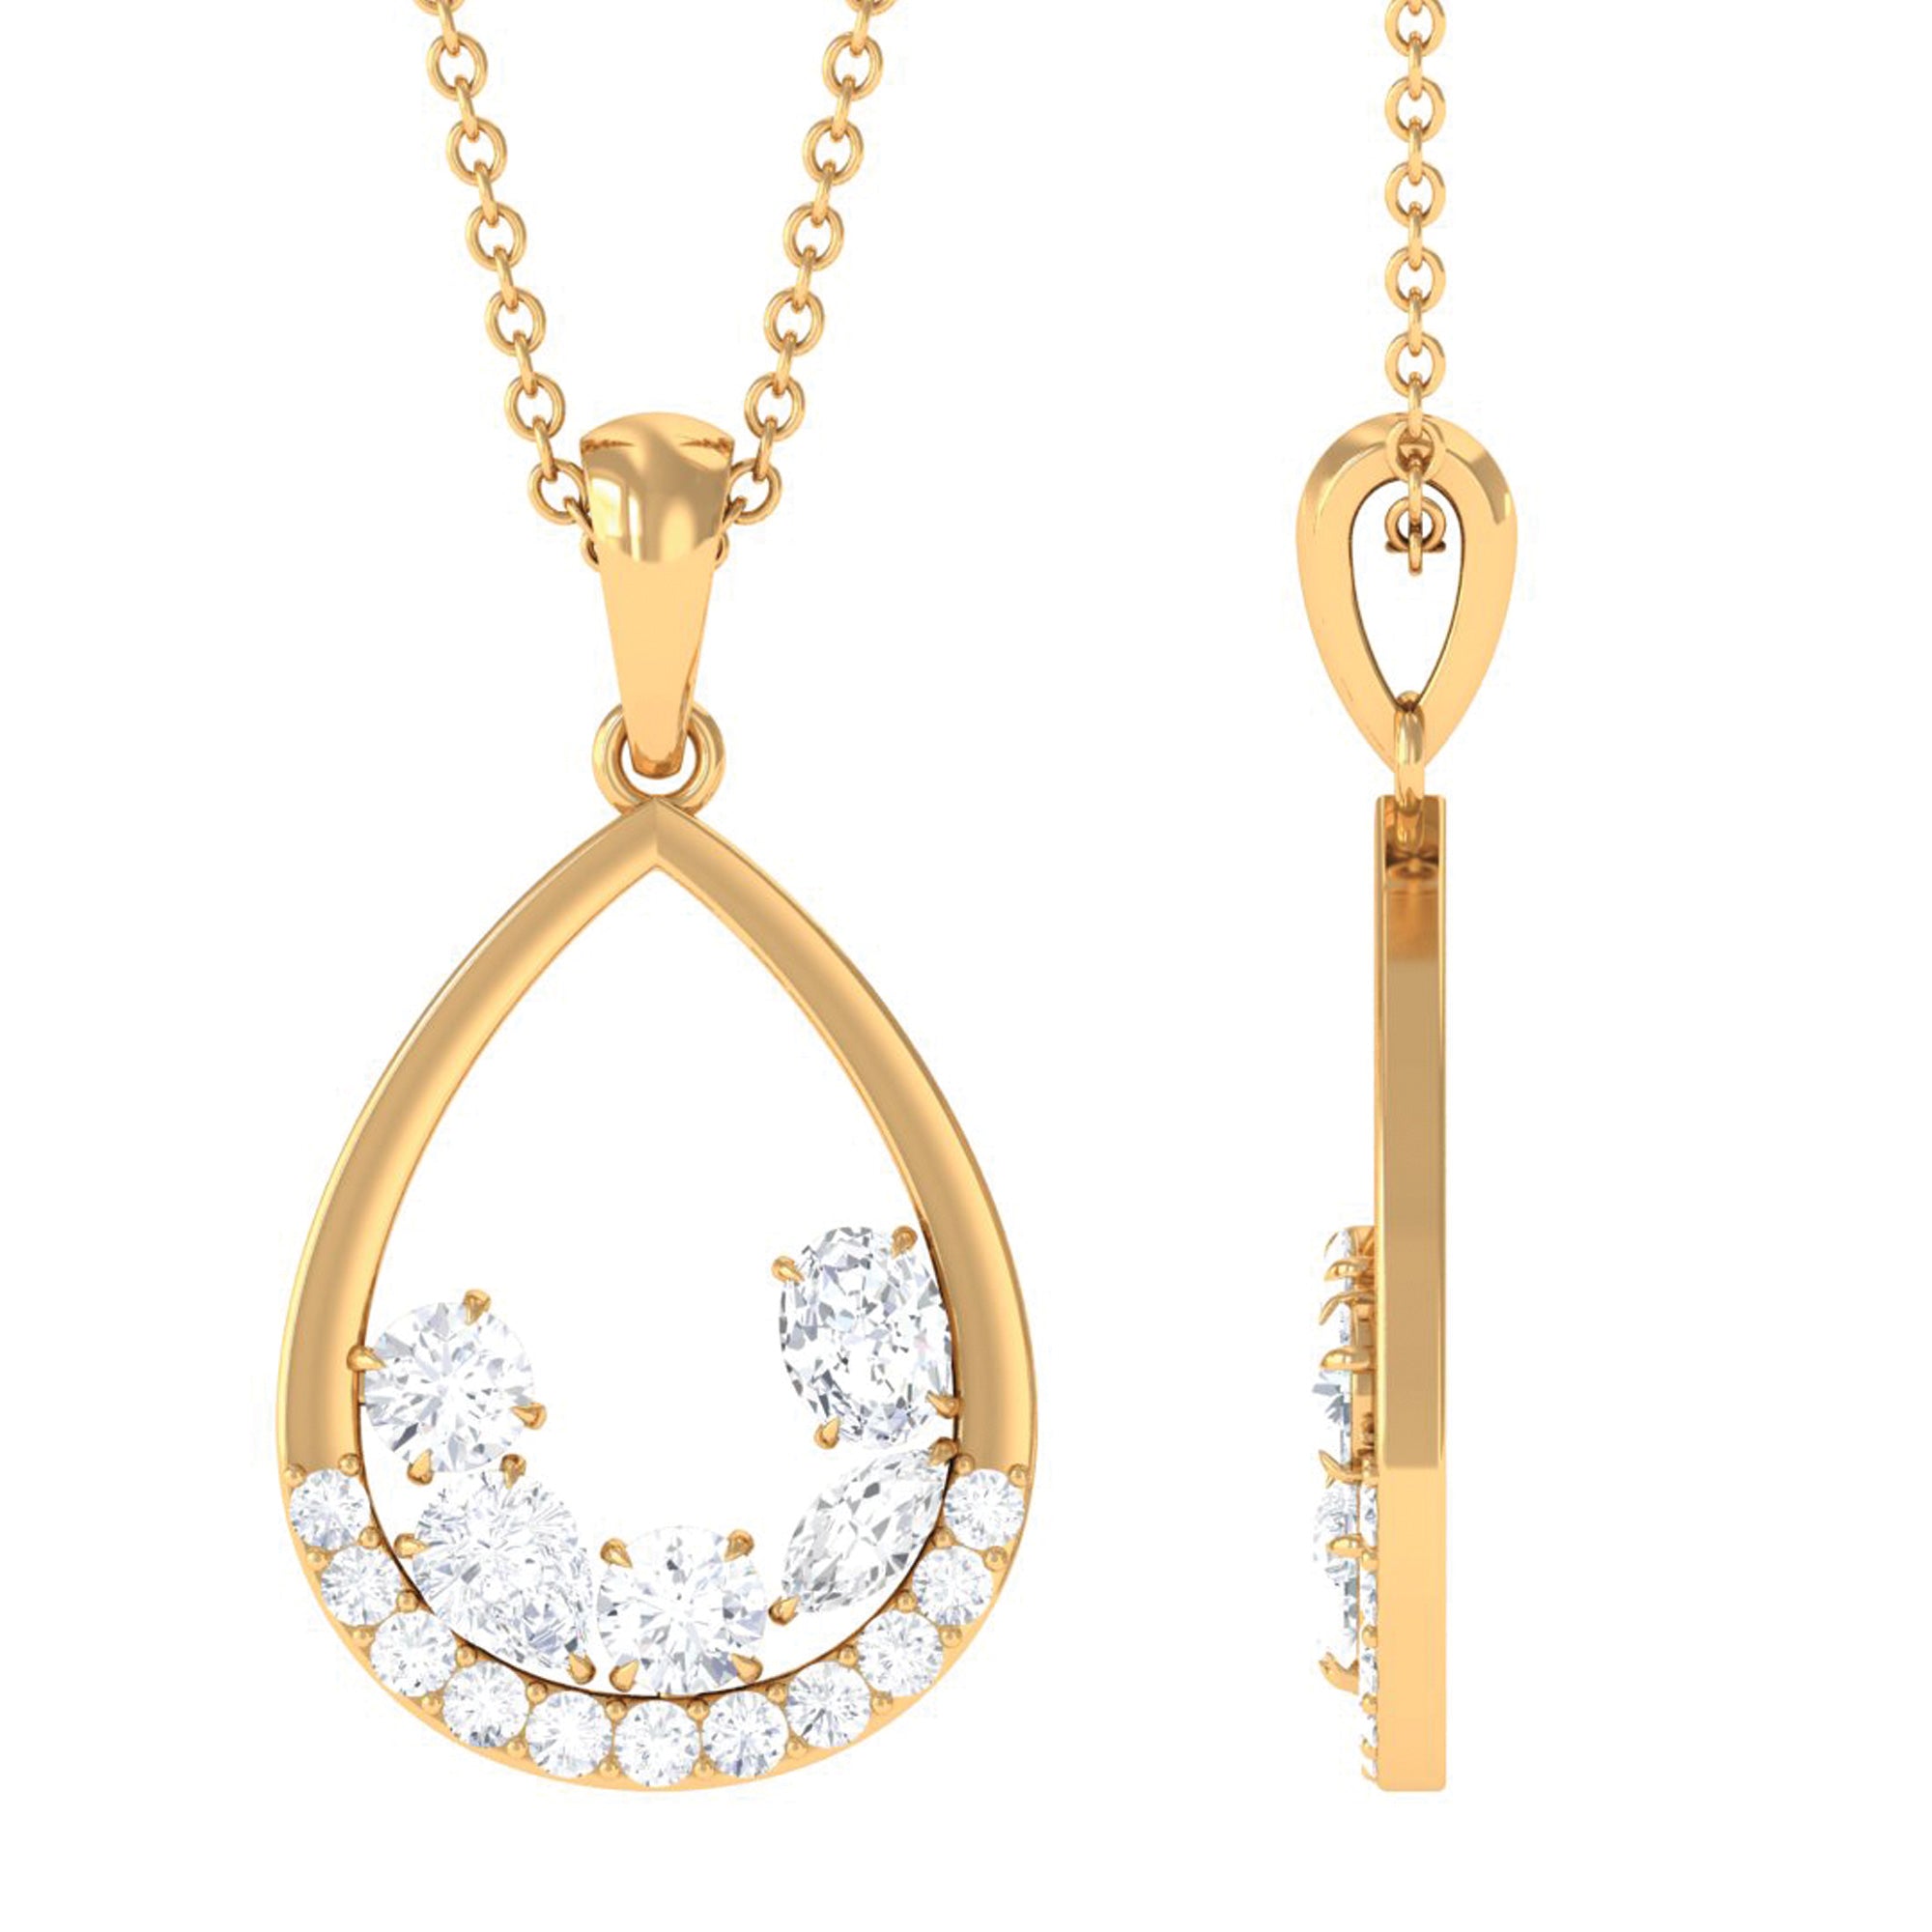 Designer Moissanite Teardrop Pendant Necklace Moissanite - ( D-VS1 ) - Color and Clarity - Rosec Jewels